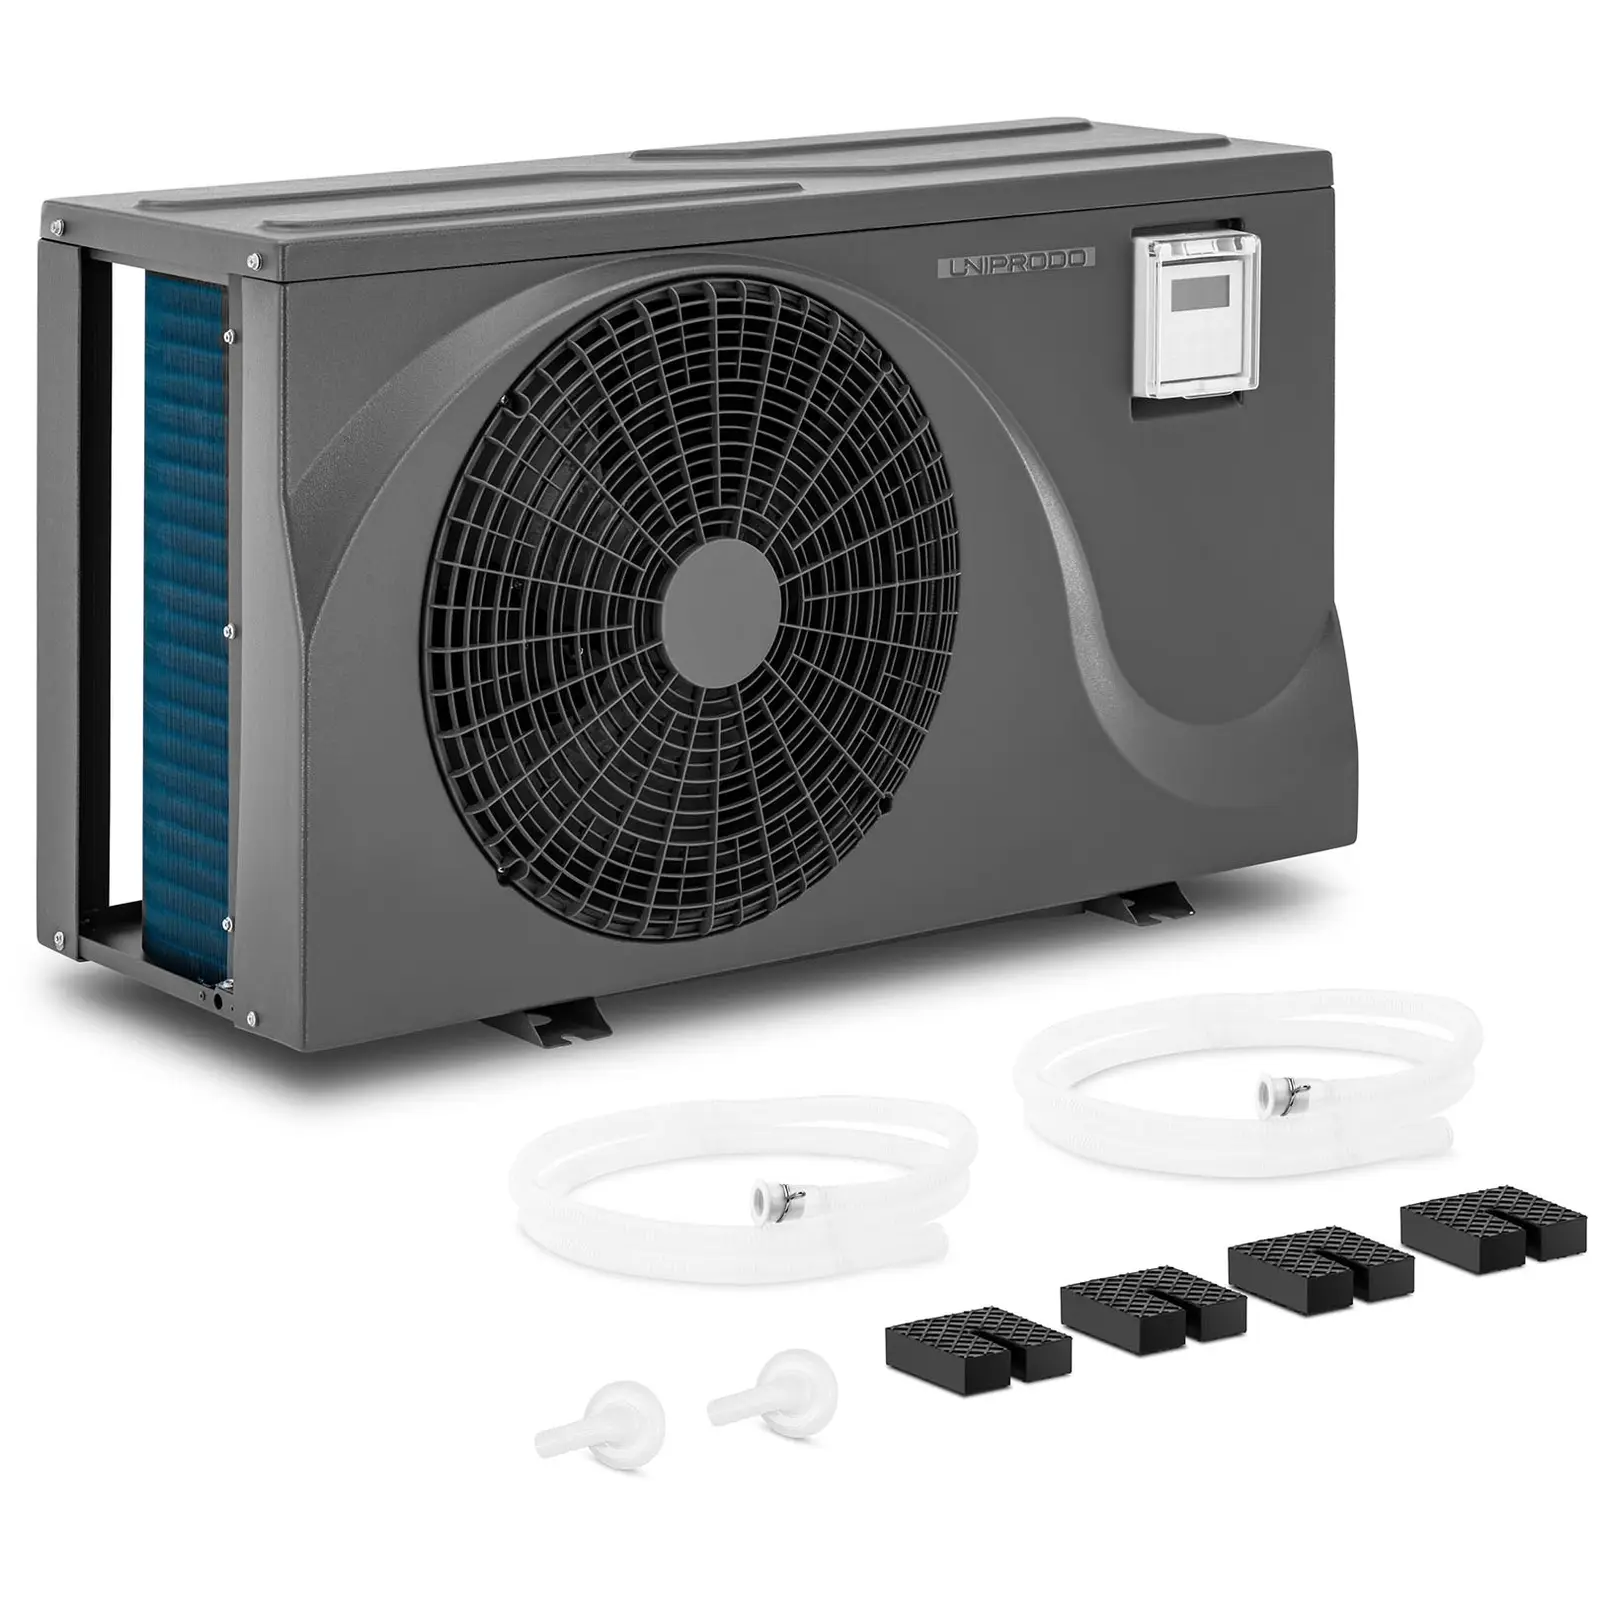 Pool heater - heat pump - 7.4 kW heating power - for 20 - 40 m³ pools